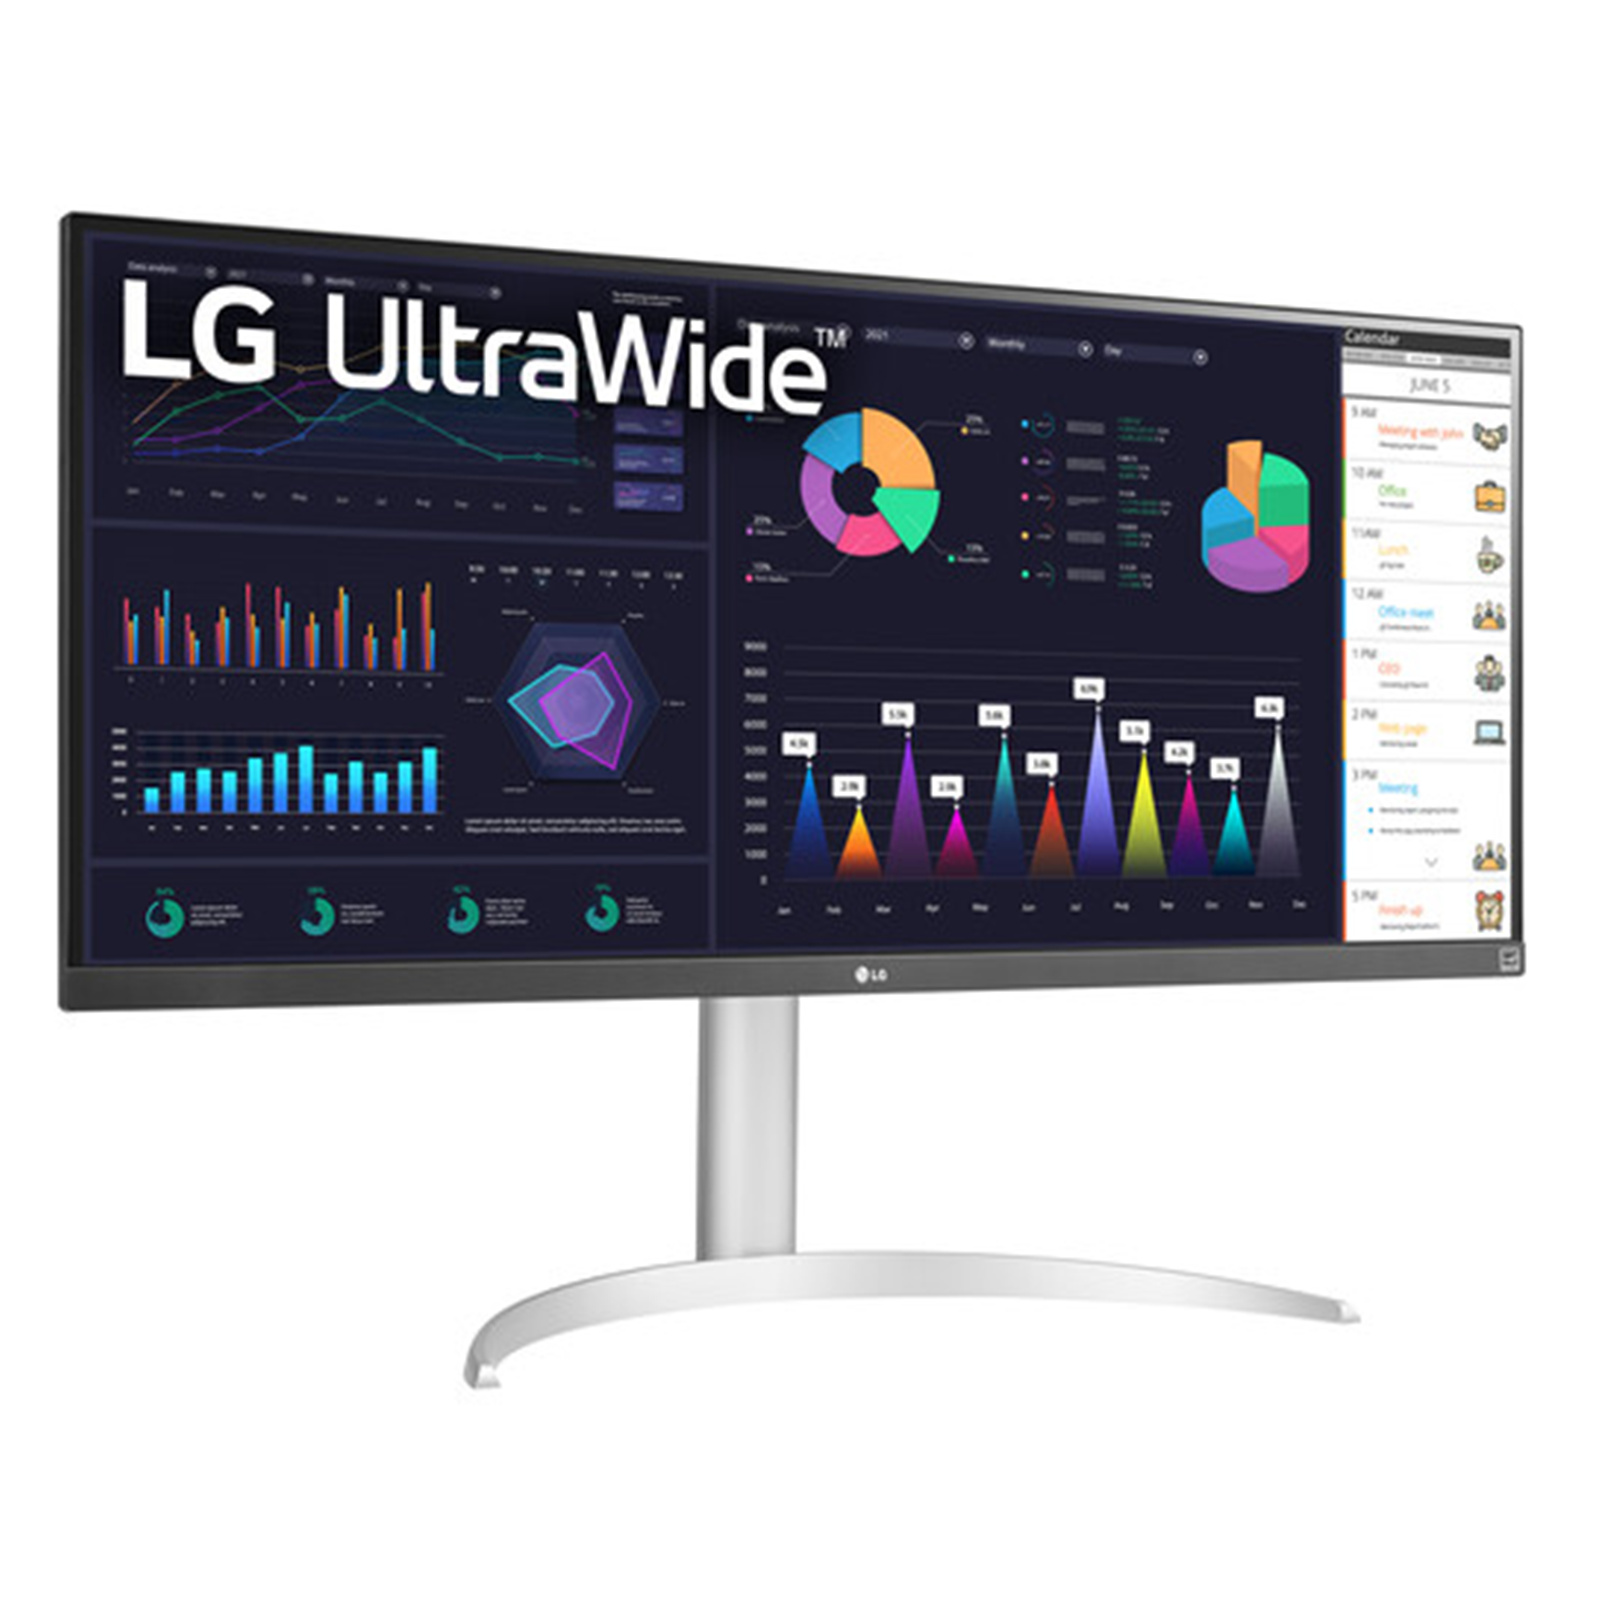 LG 34WQ650-W 34" UltraWide FHD IPS Monitor